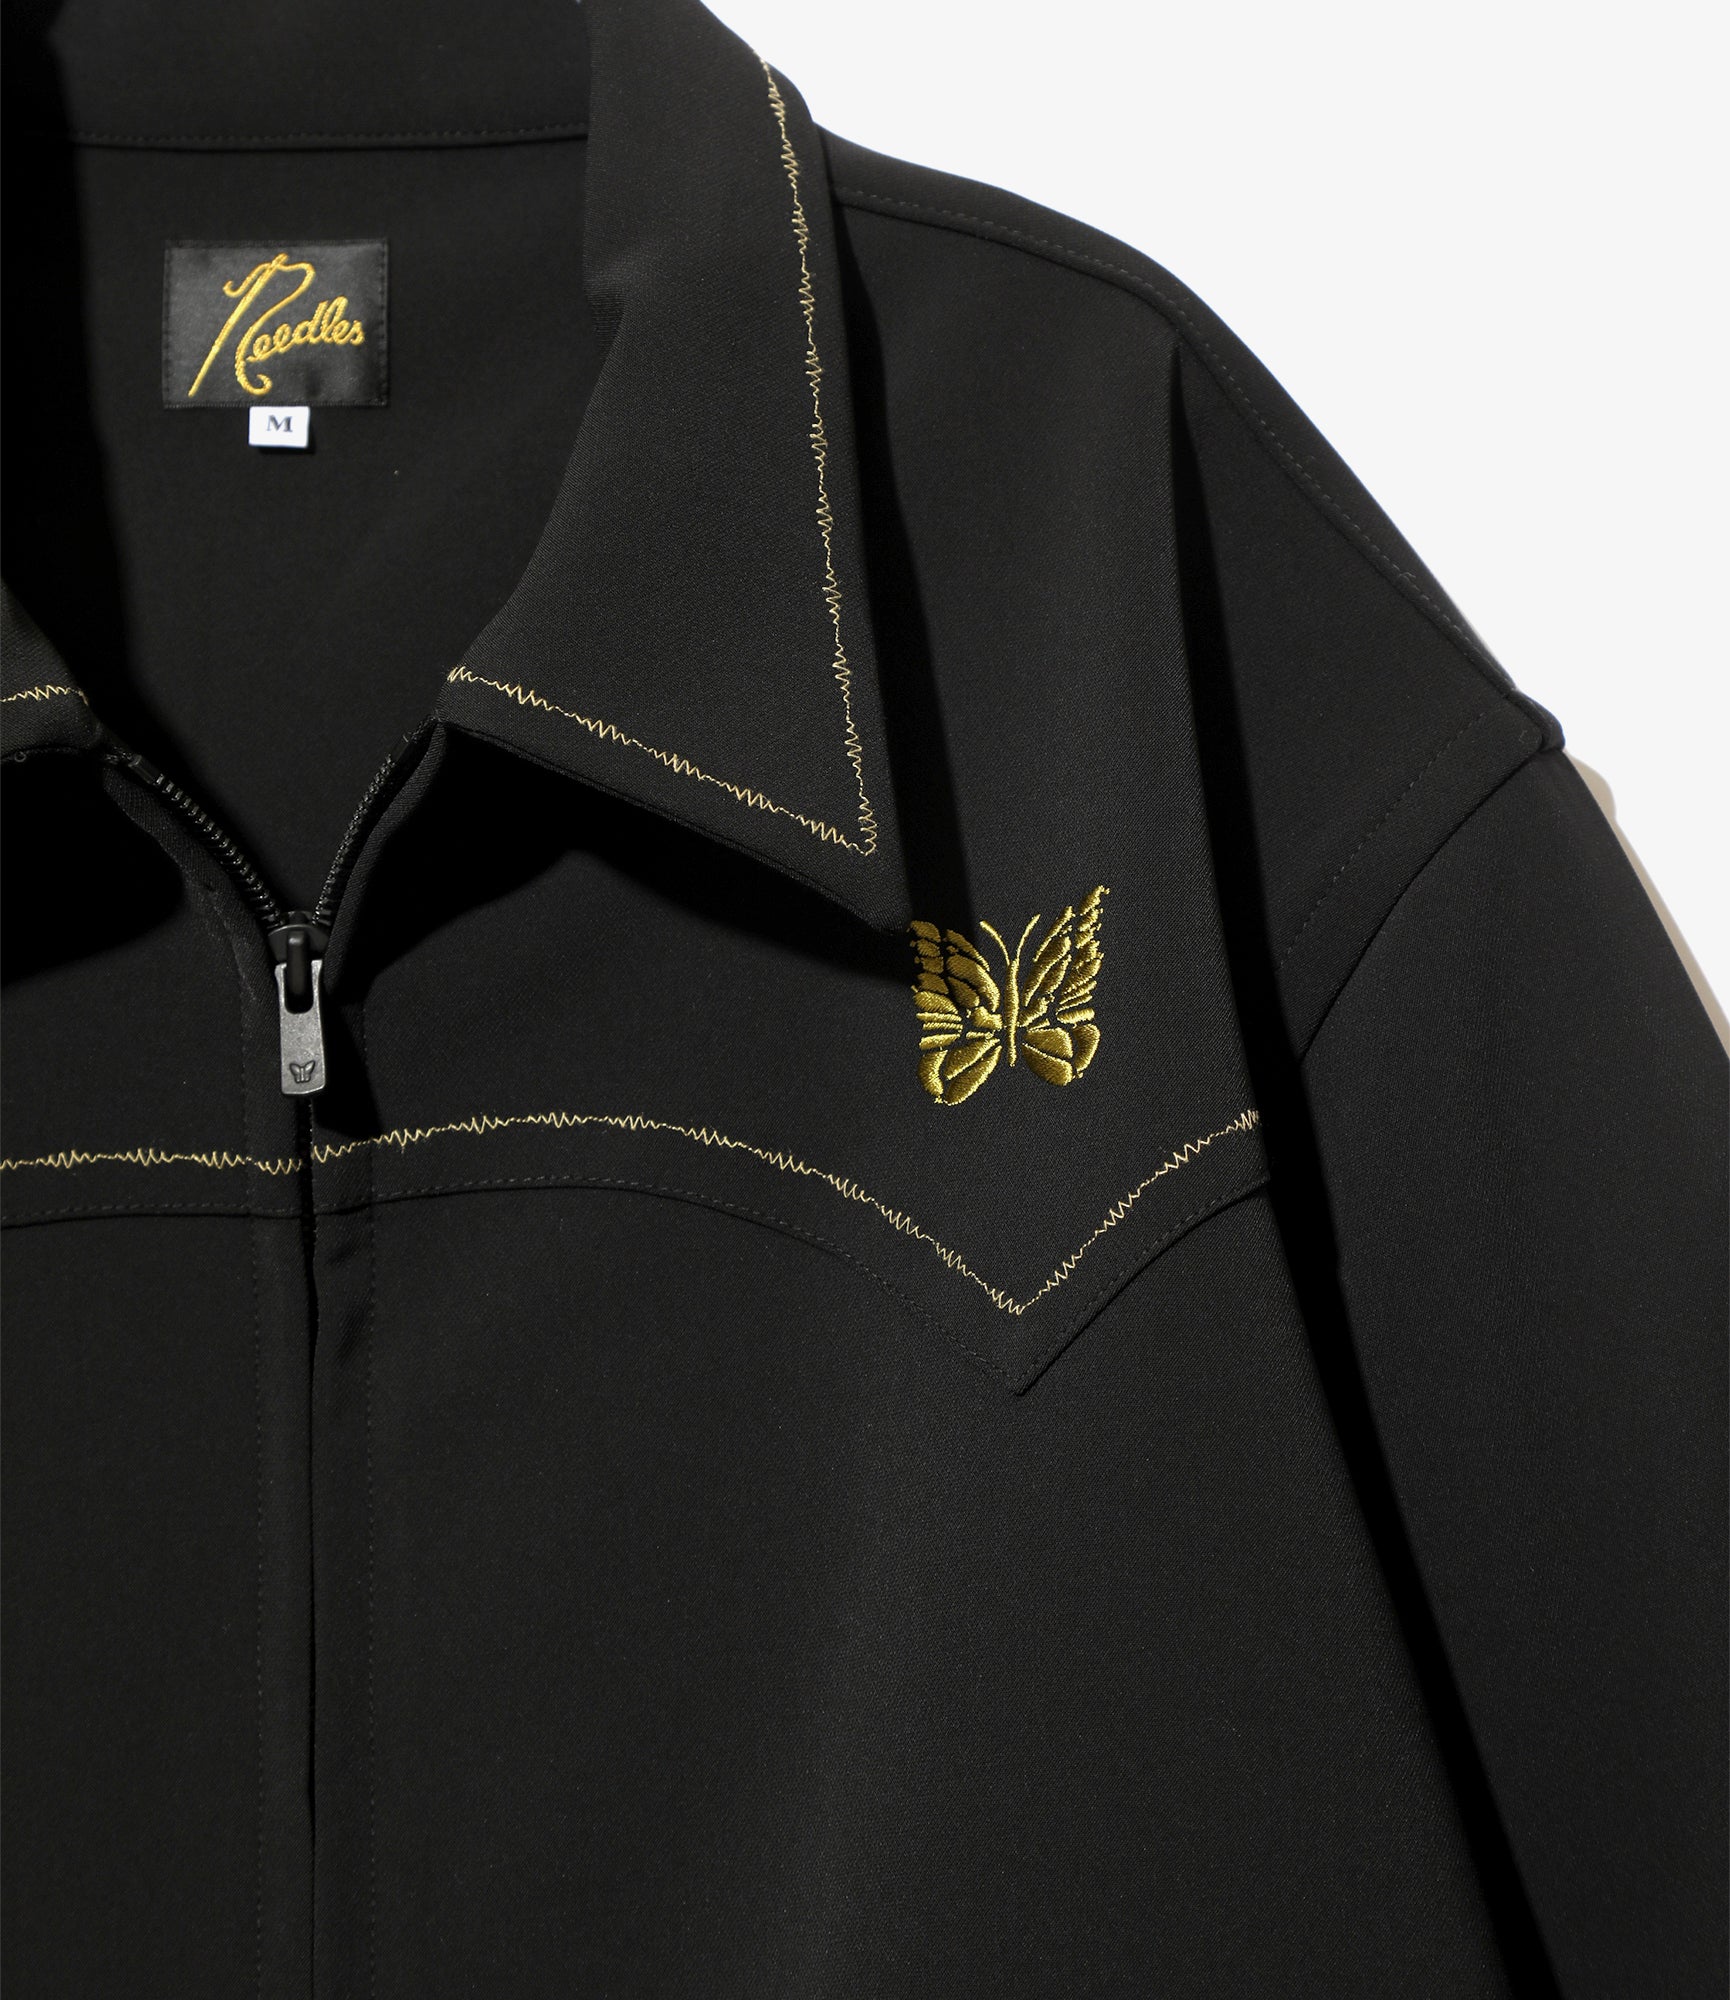 Western Sport Jacket - Black - PE/PU Double Cloth